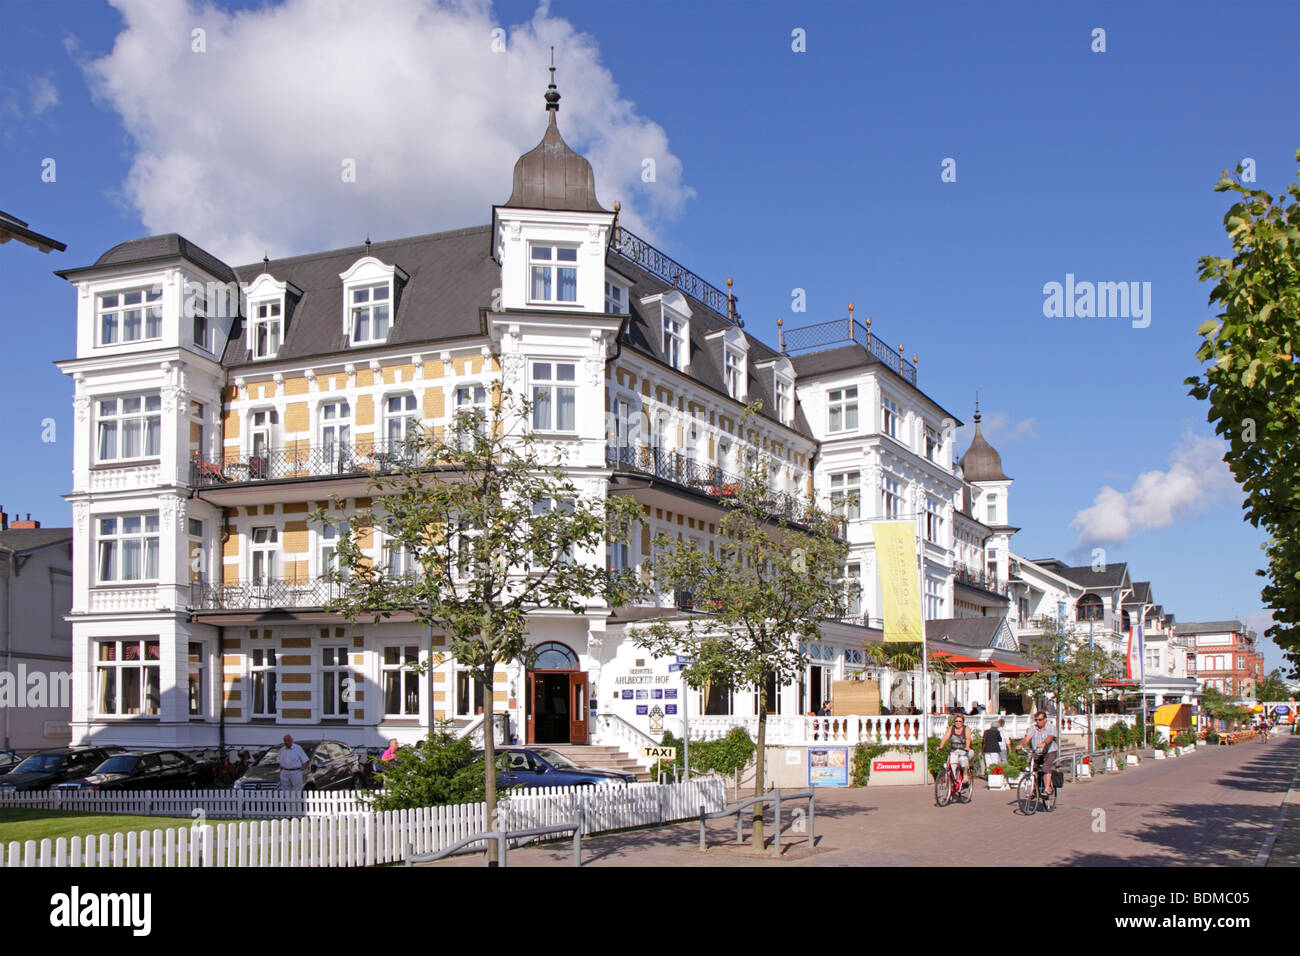 Hotel Ahlbecker Hof, Ahlbeck, Usedom Island, Mecklenburg-Western Pomerania, Northern Germany Stock Photo